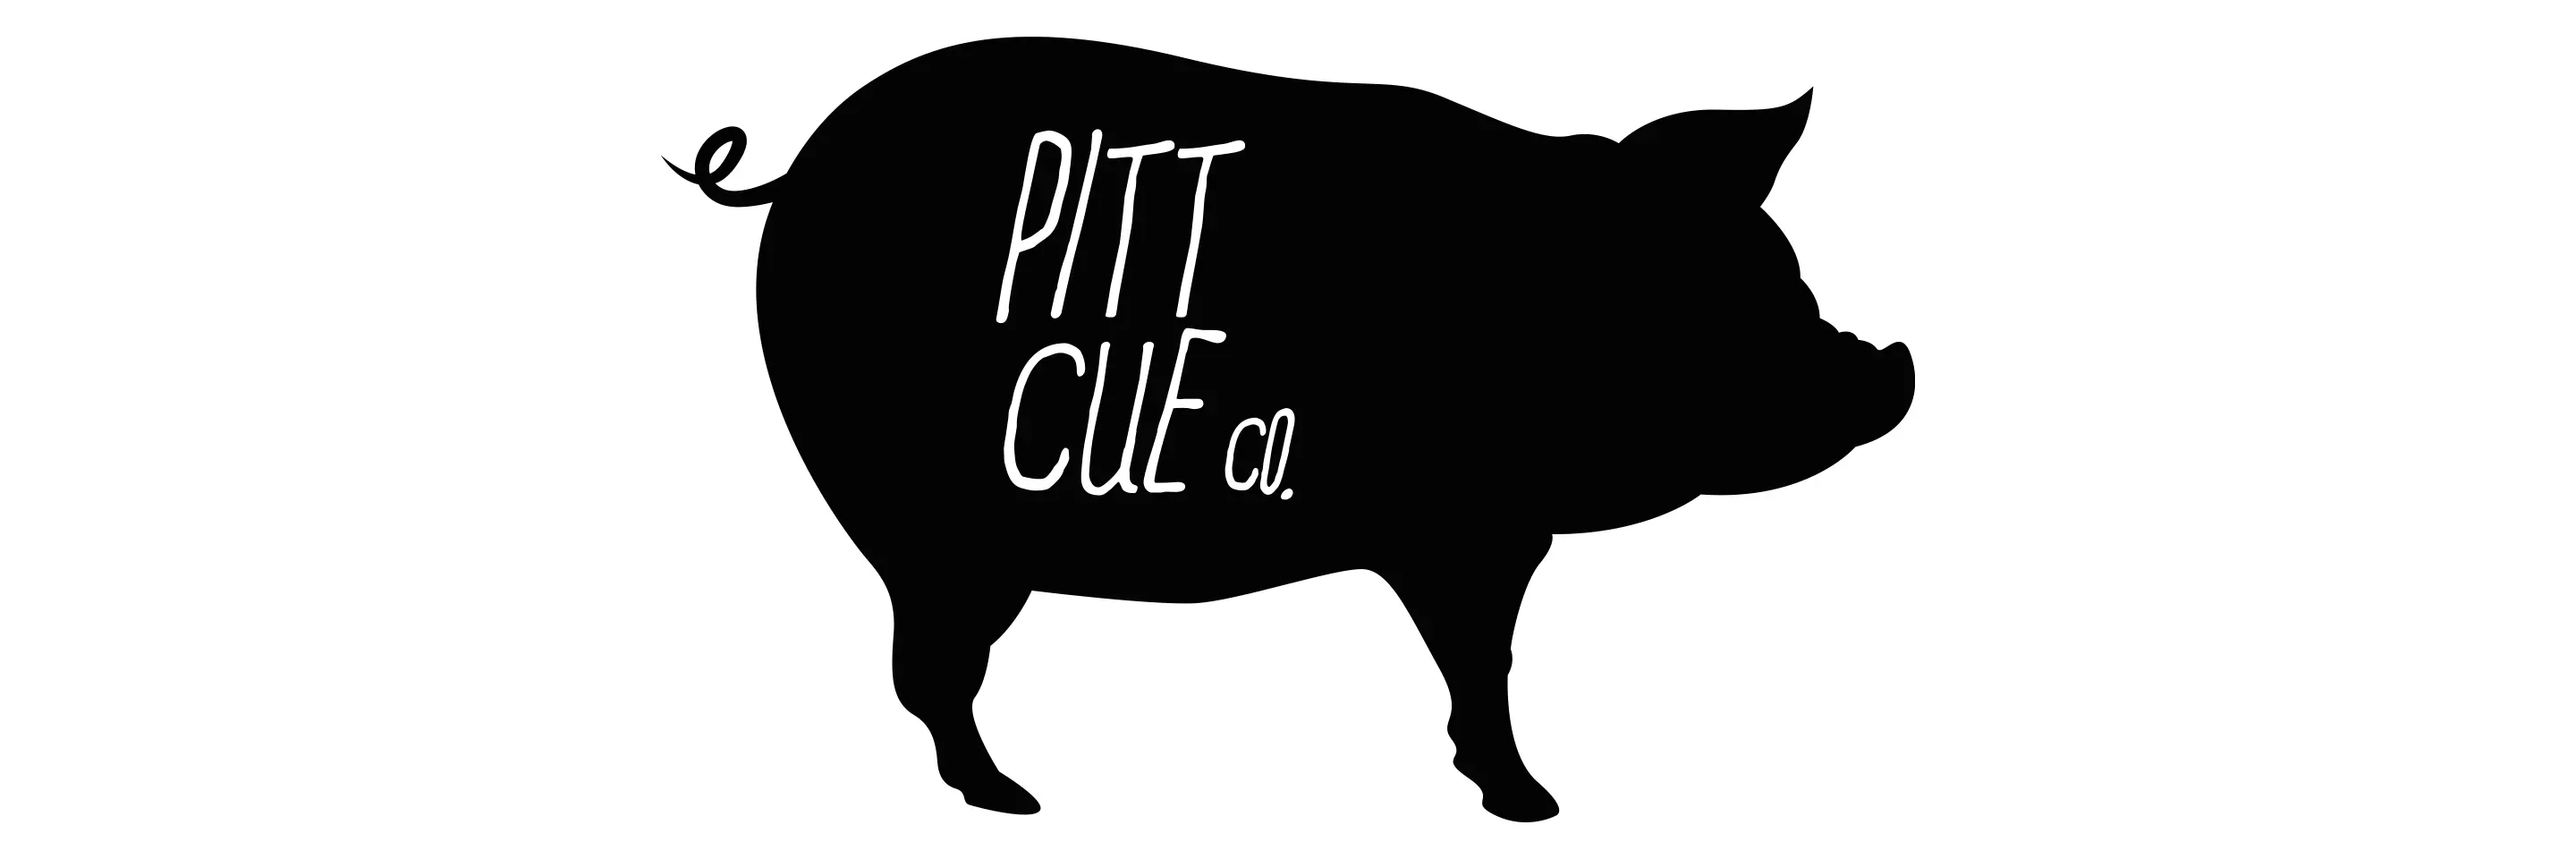 Pitt Cue Logo - Main